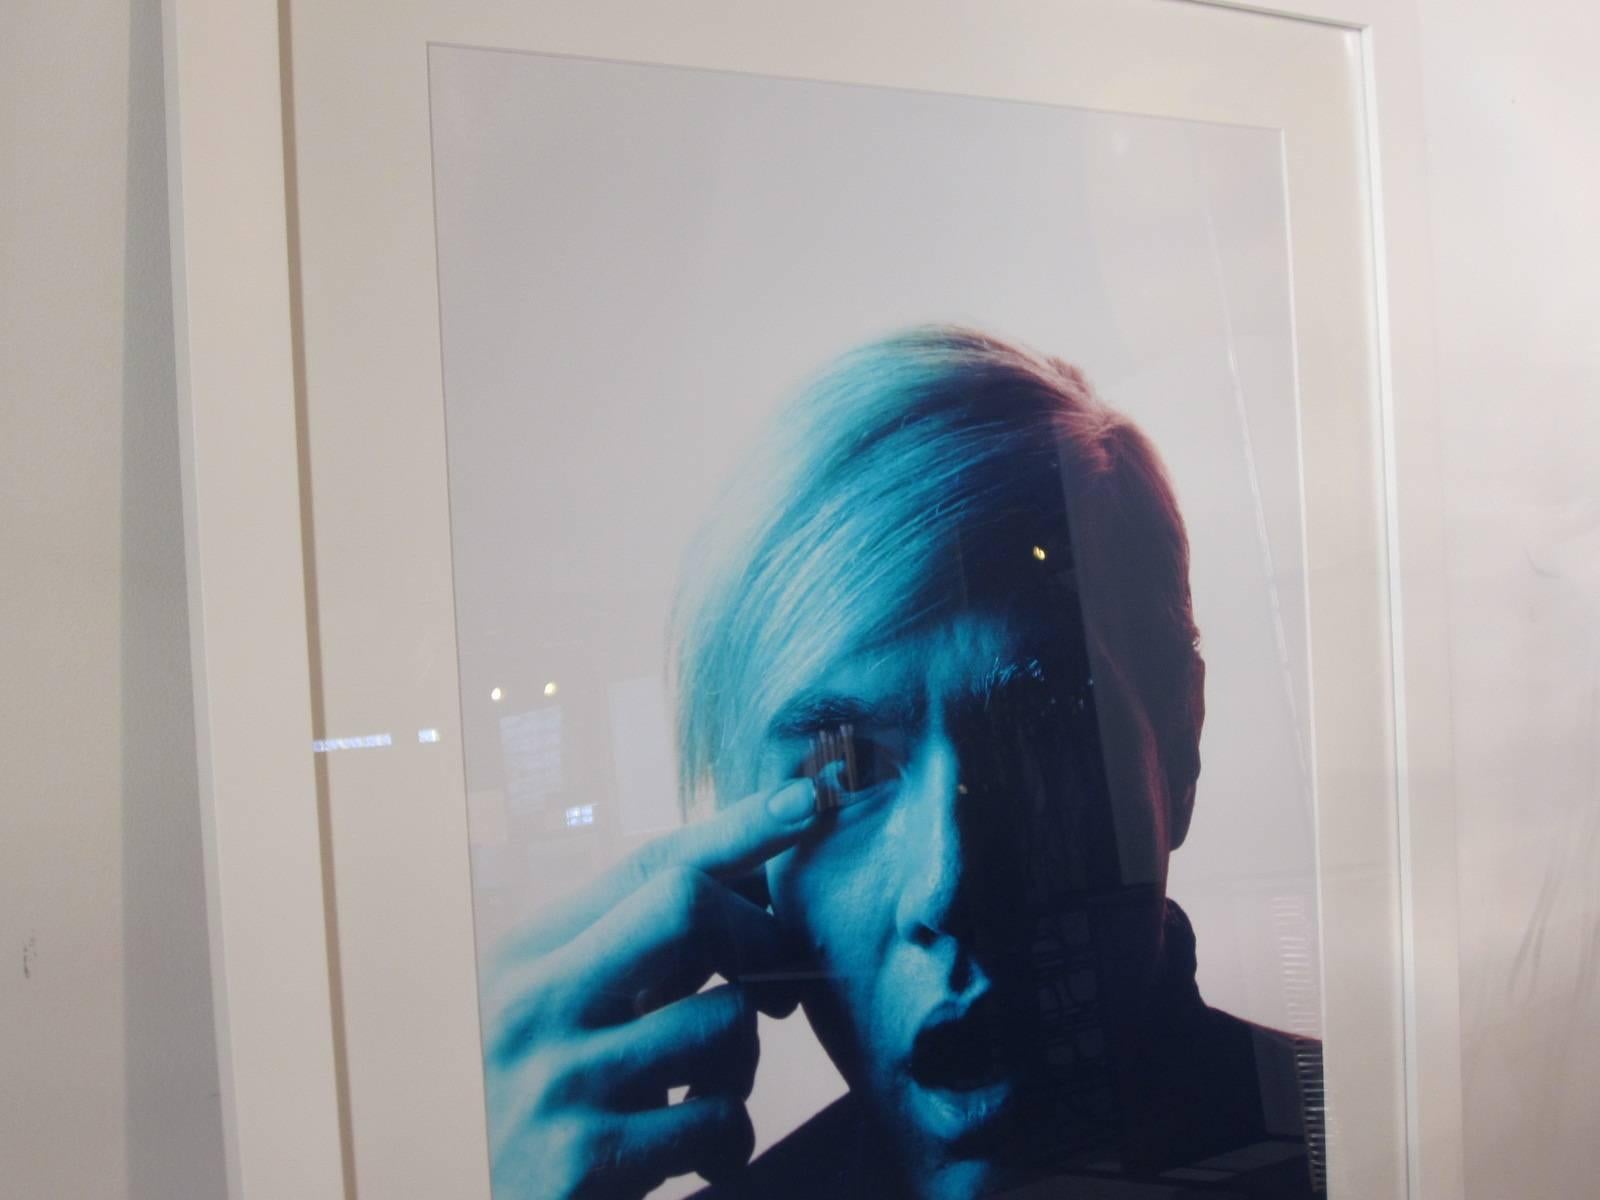 Modern Andy Warhol, 1968 Portrait by Philippe Halsman